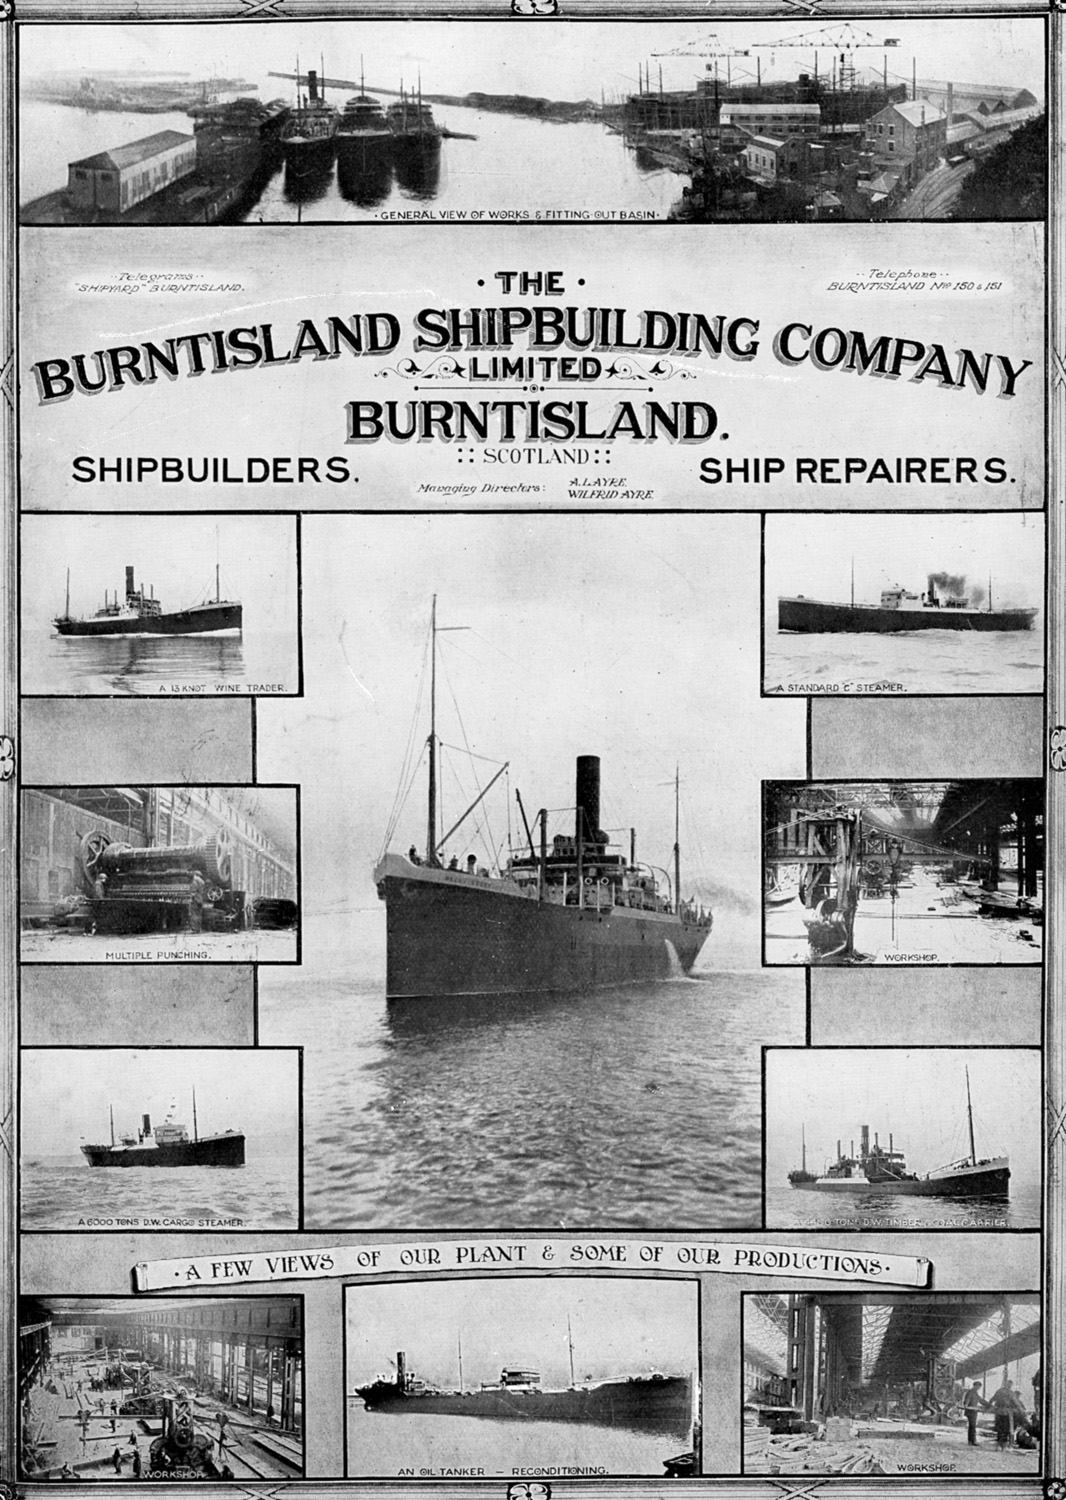 Shipyard advertisement from 1923